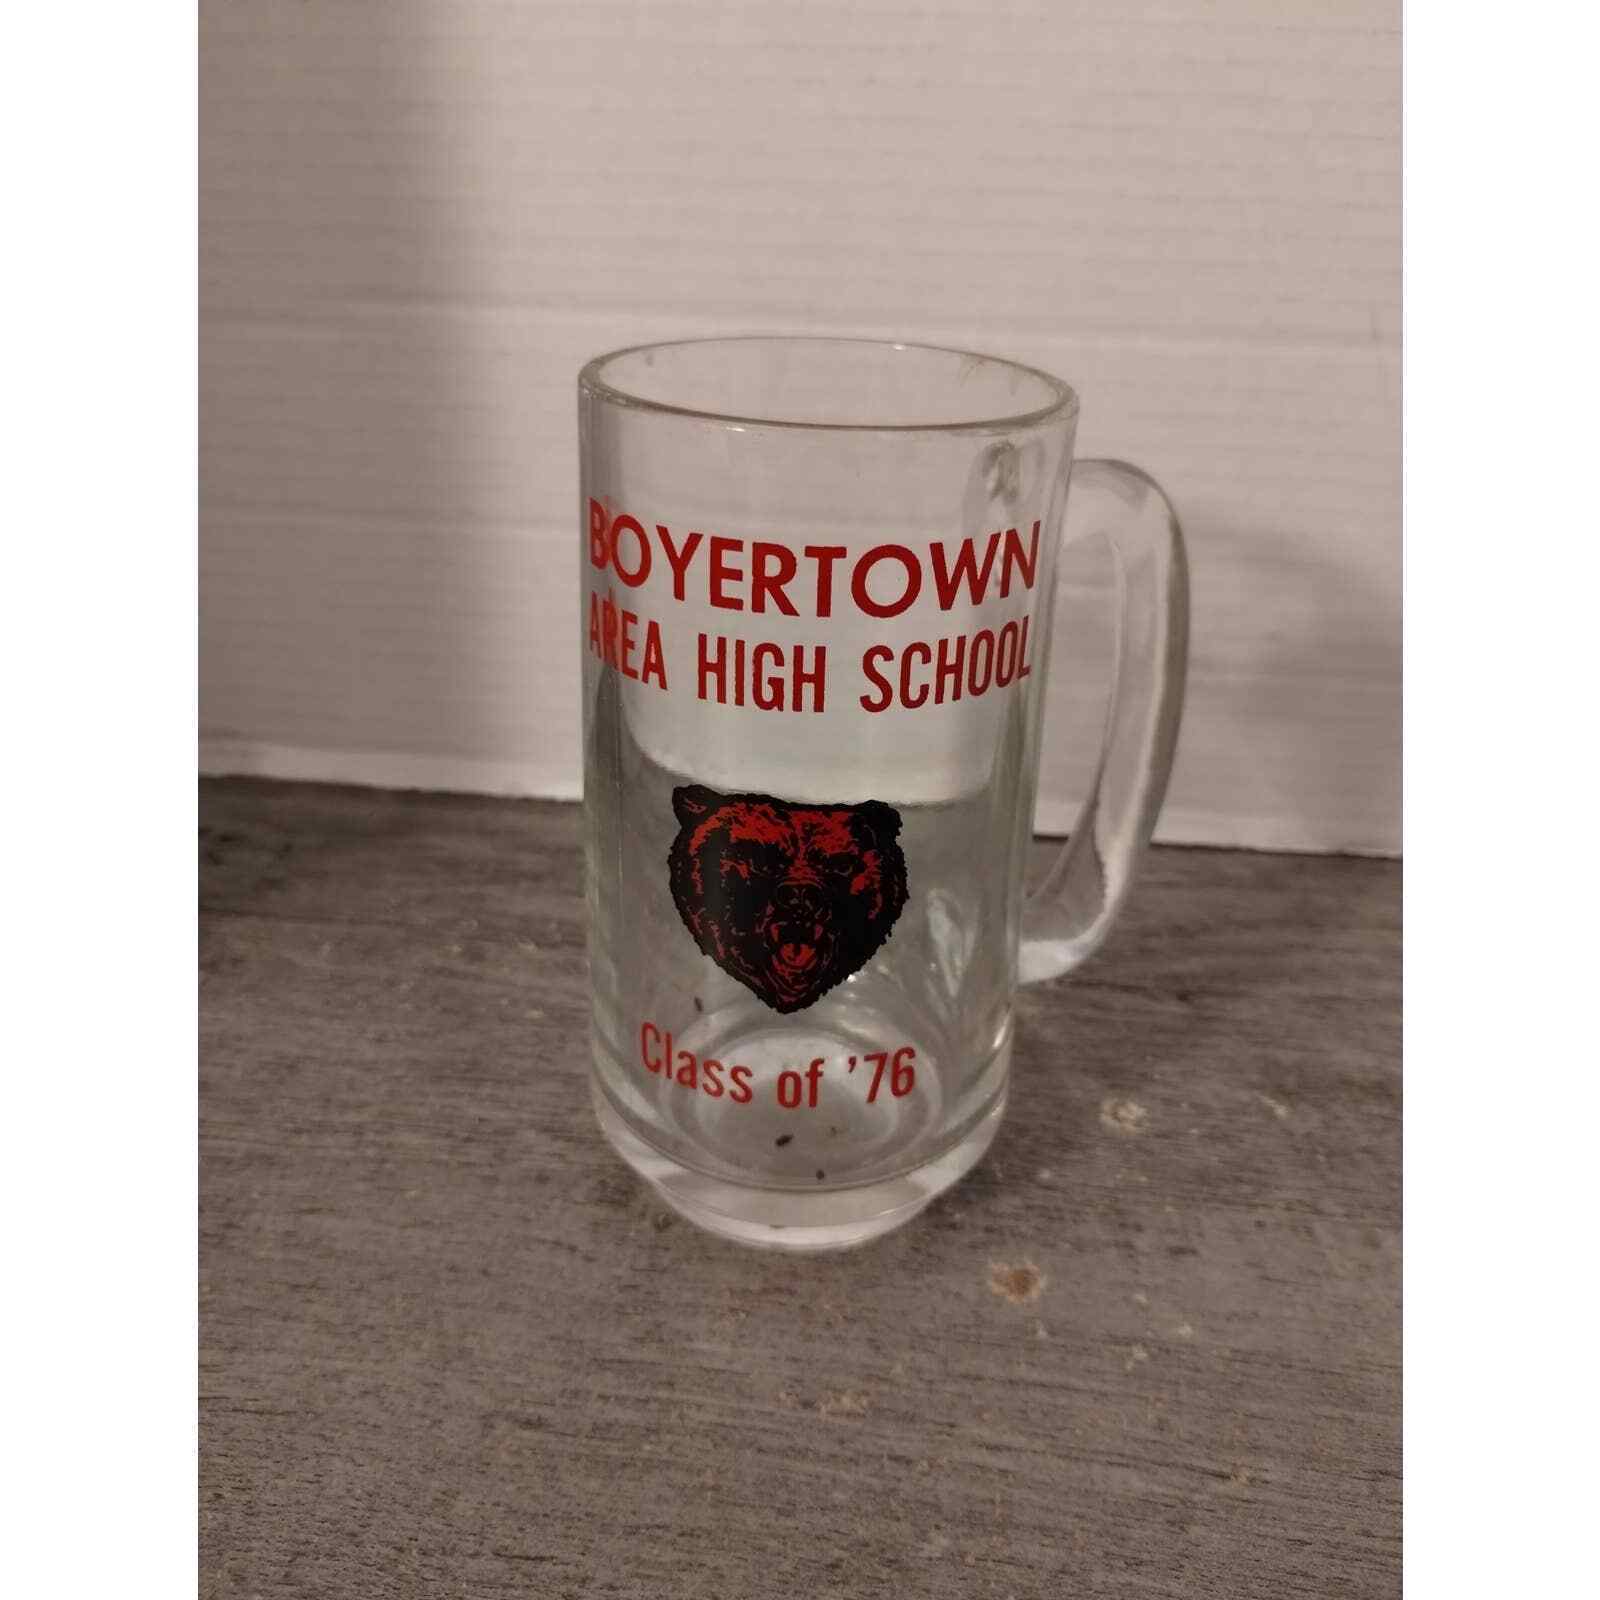 Boyertown Area High School Class of \'76 Stein Mug